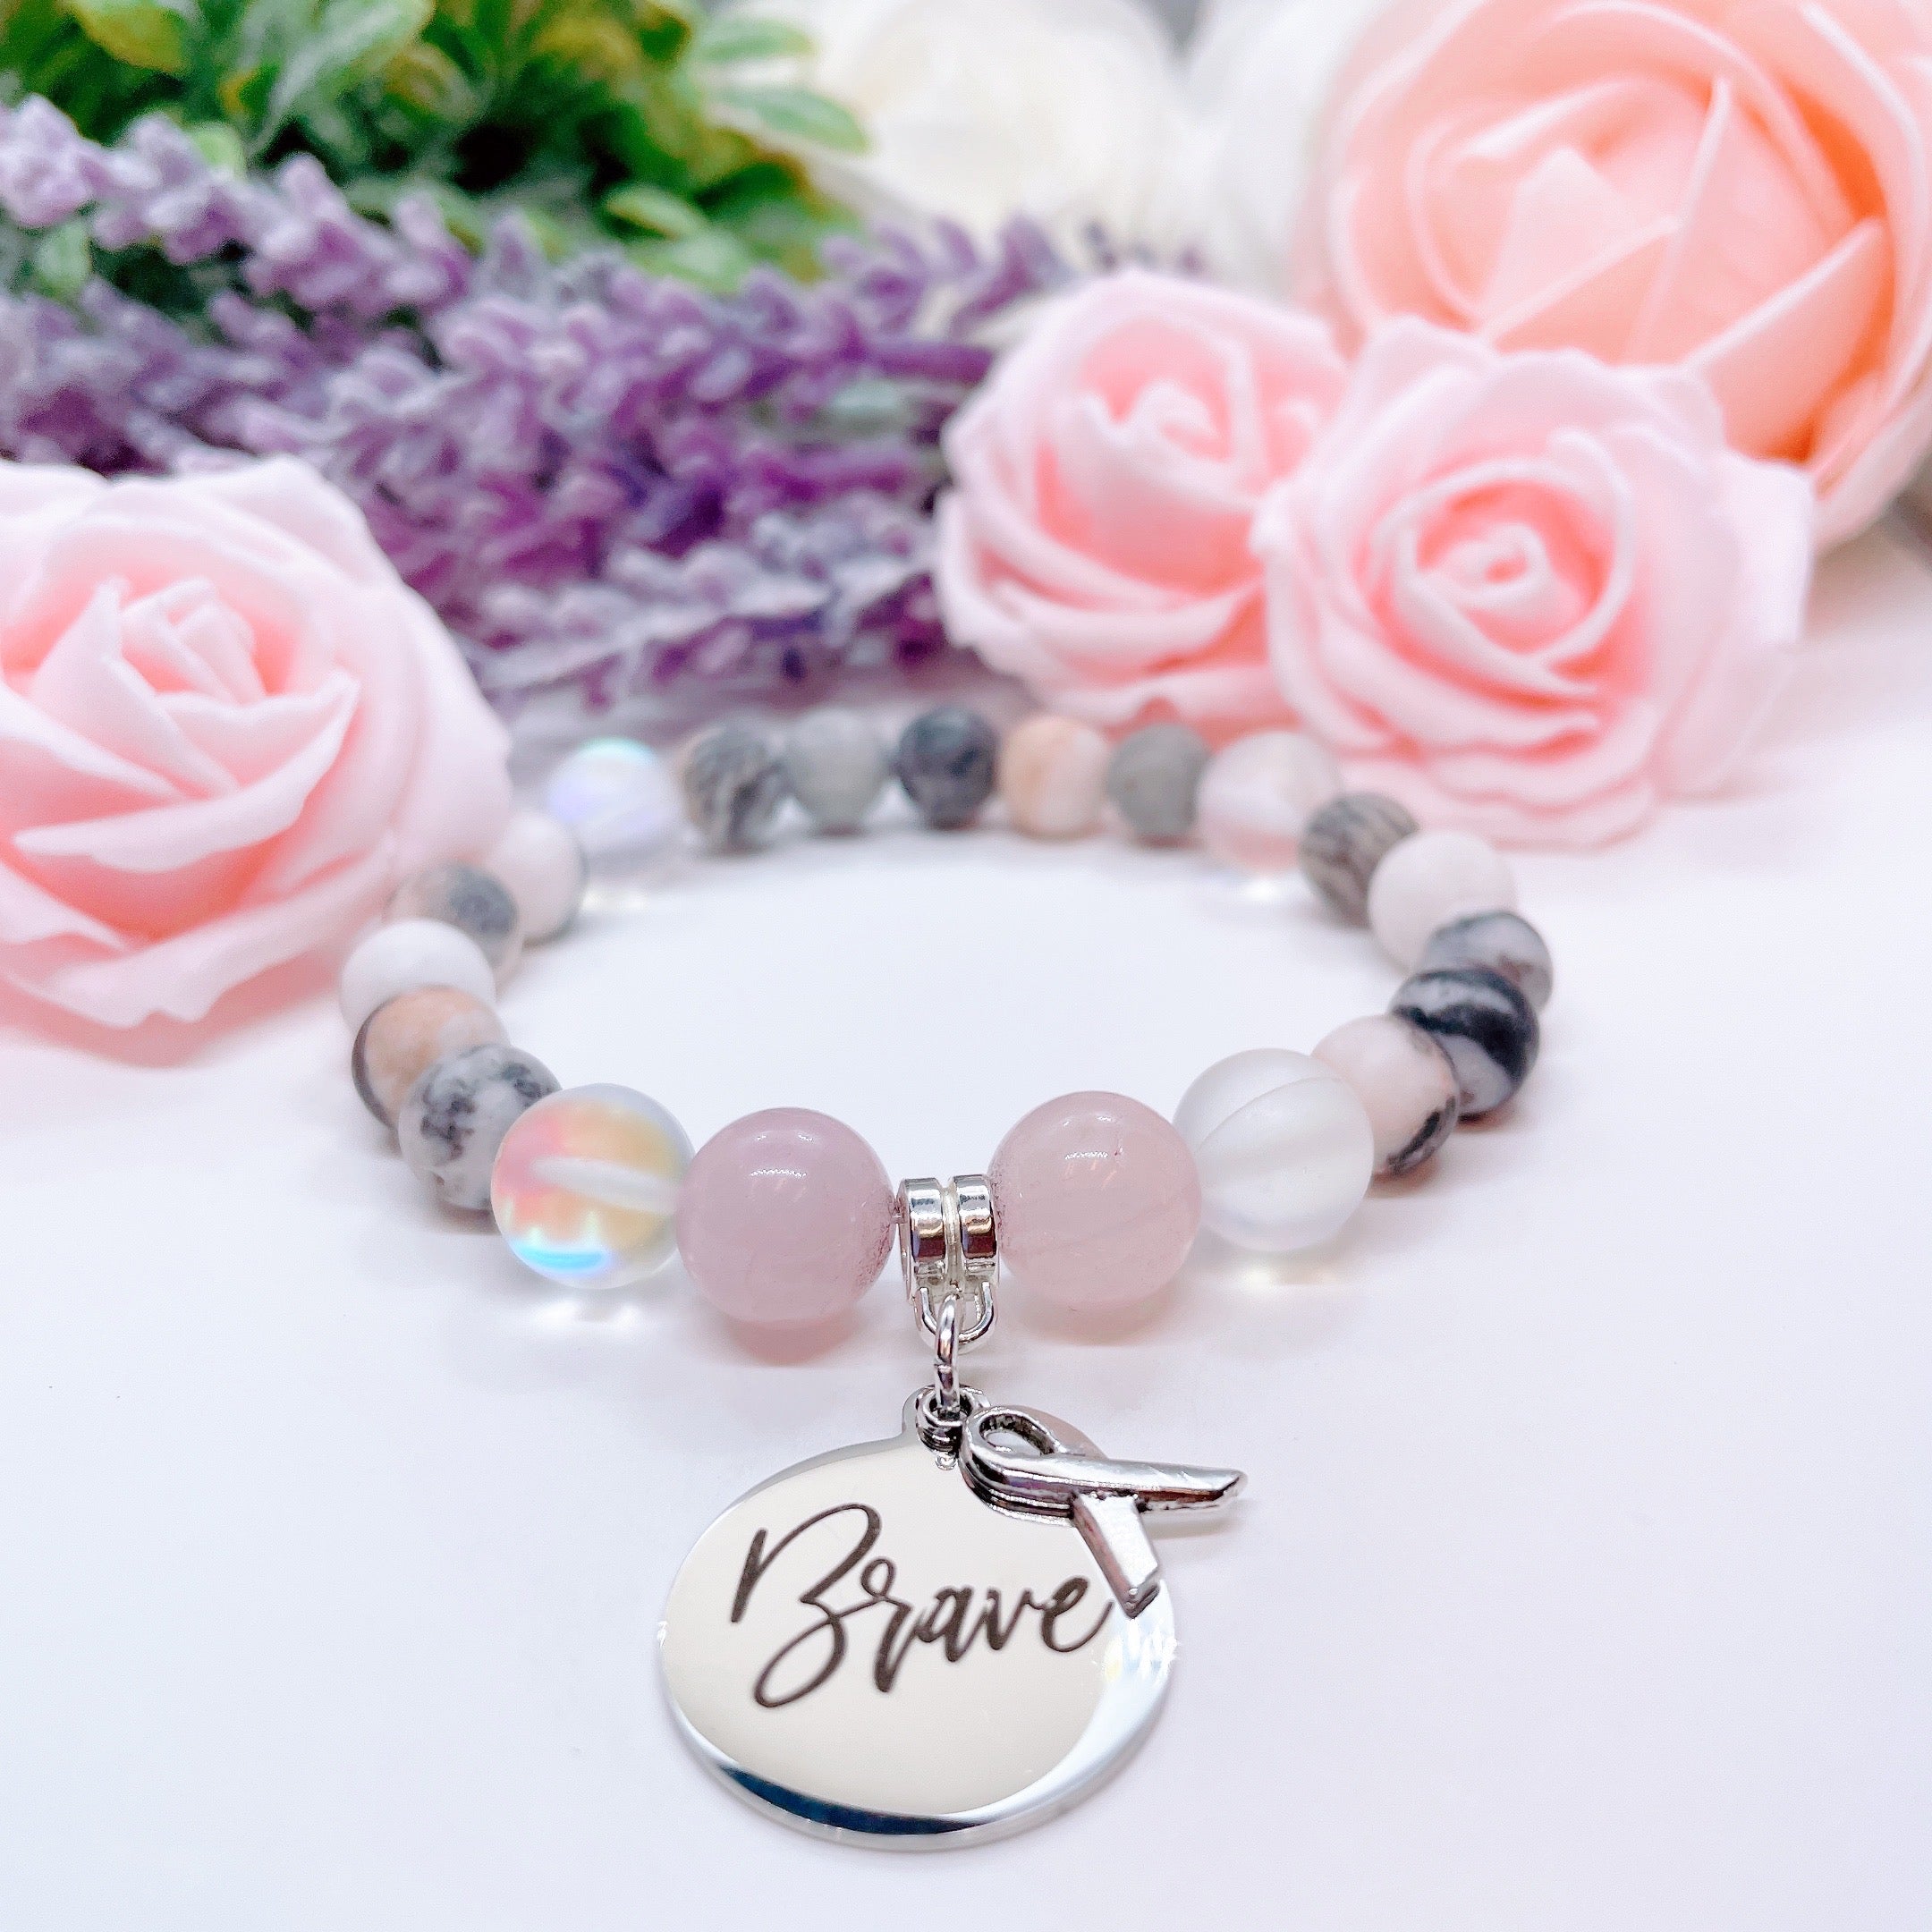 Brave with Cancer Charm Bracelet Rose Quartz